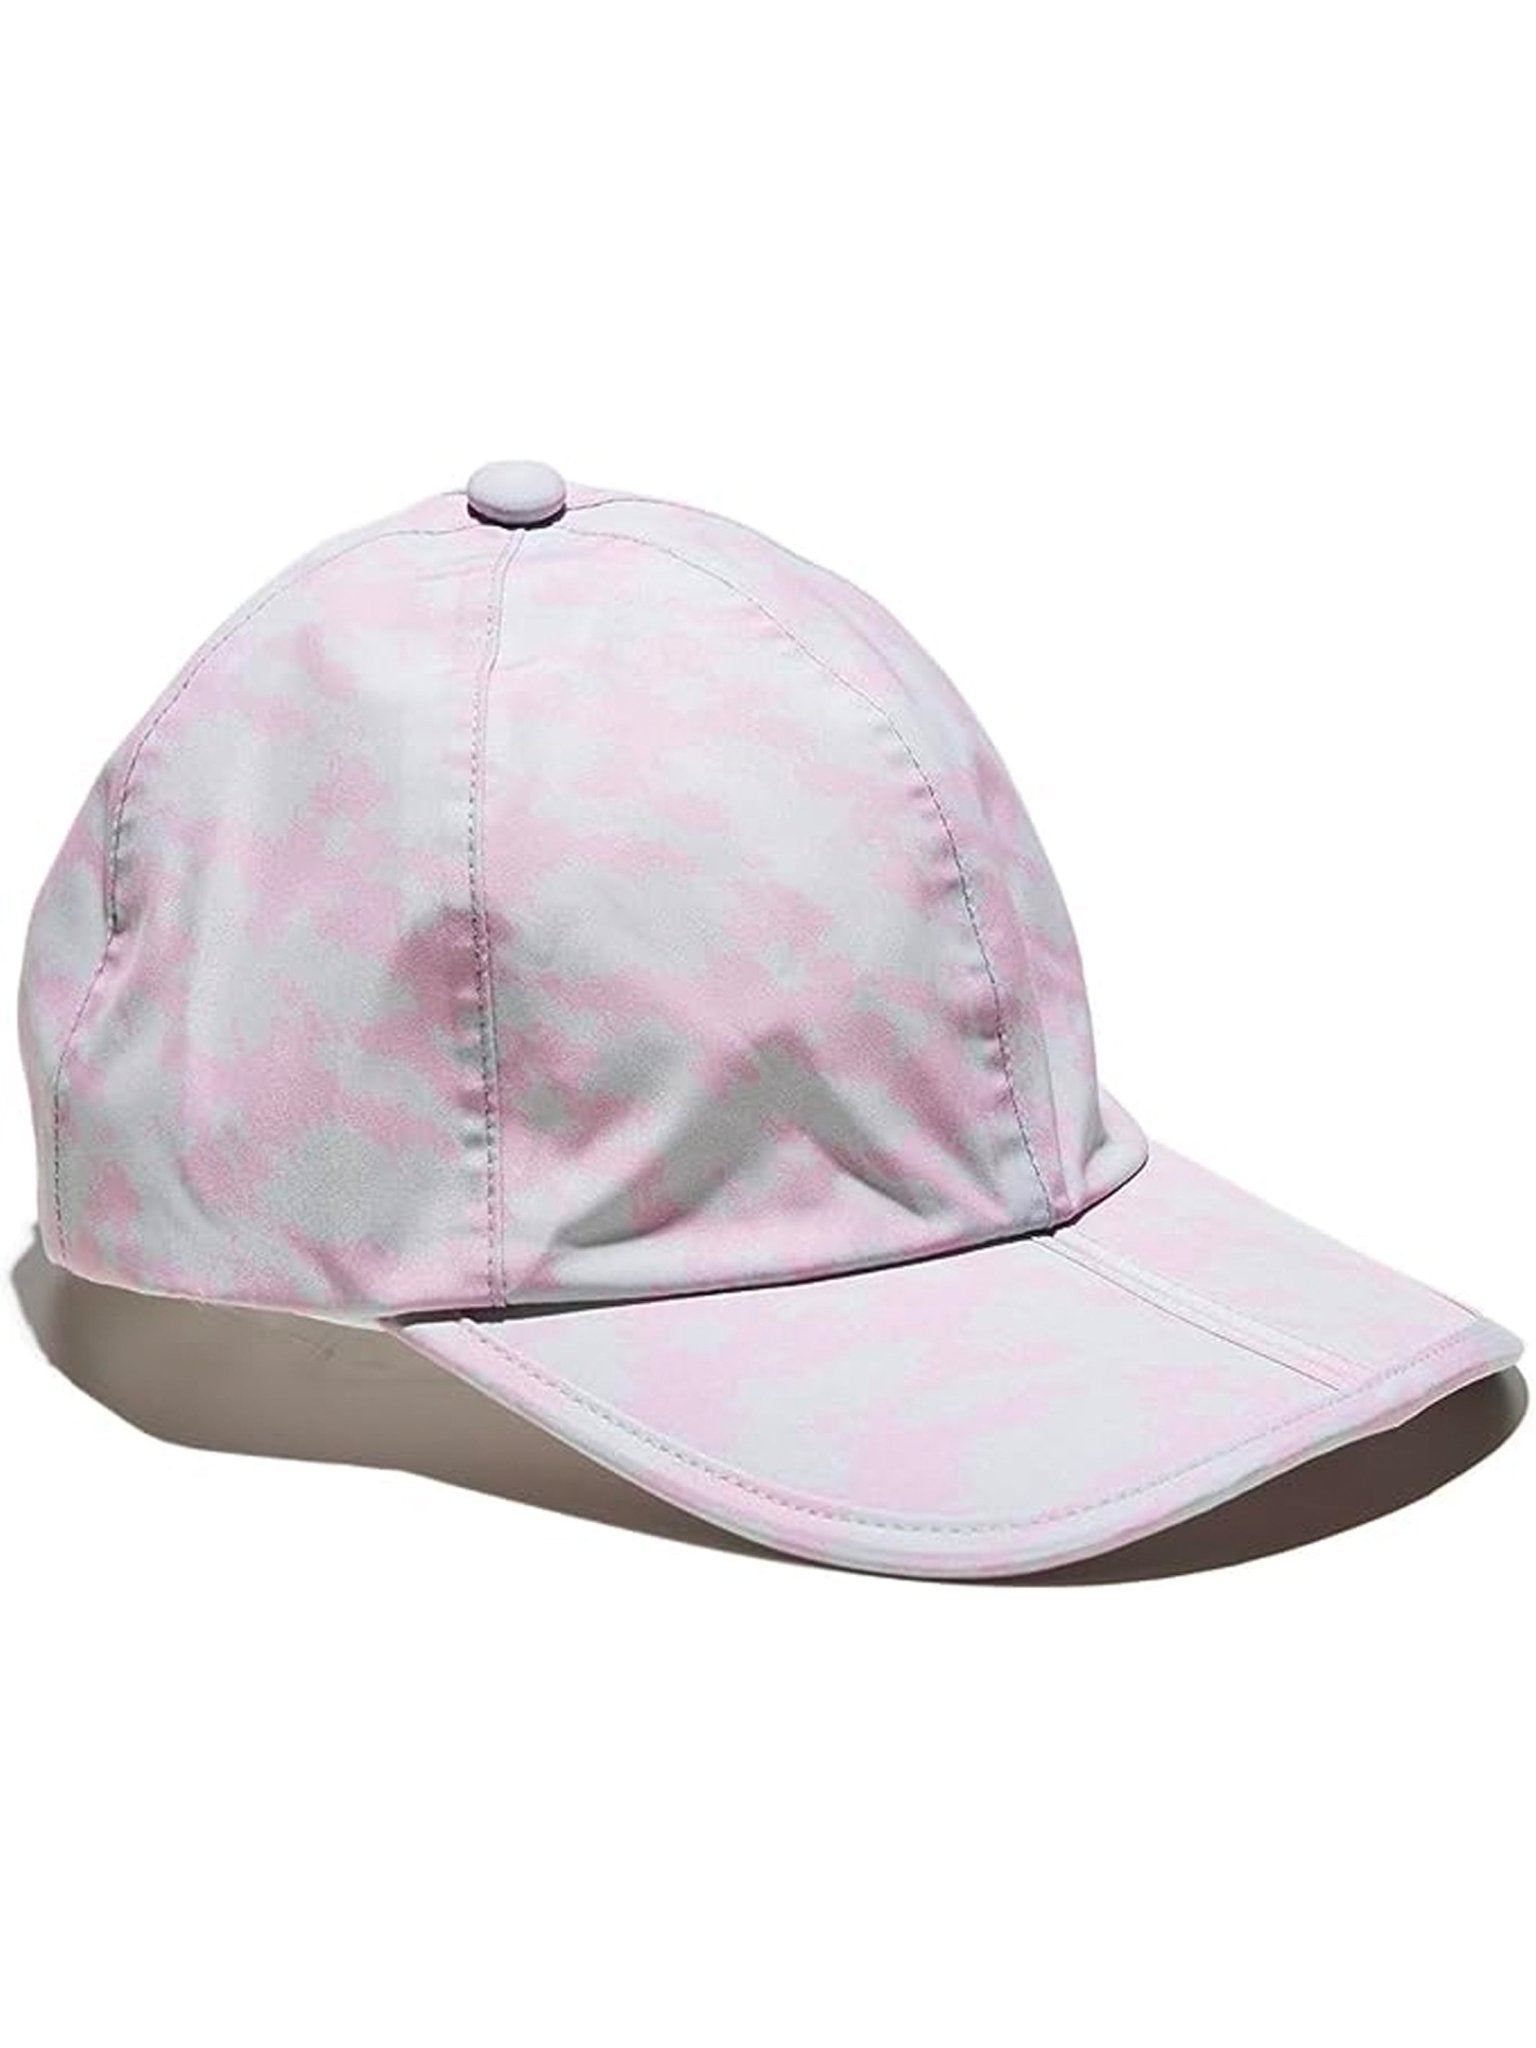 4elementsclothingSealSkinzSealskinz - Waterproof Windproof Fold Hat / Salle Peaked Cap / Baseball cap / Folding Peak Hat pinkHats13200038009500